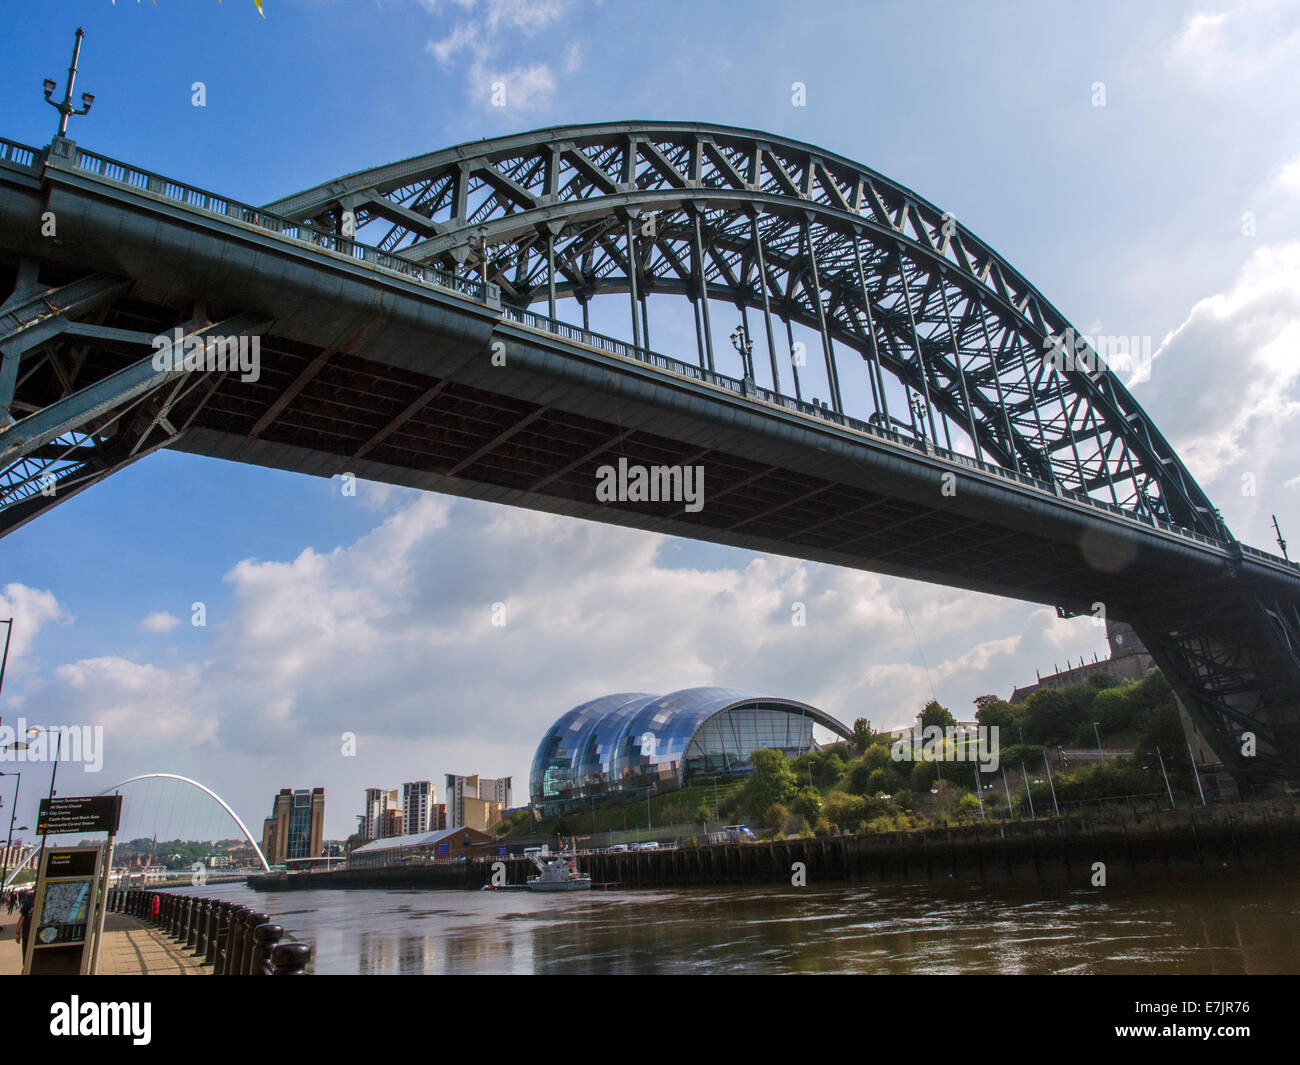 Newcastle upon Tyne: the Quayside showing bridges over the River Tyne, including the Gateshead Millennium Bridge (background) Stock Photo